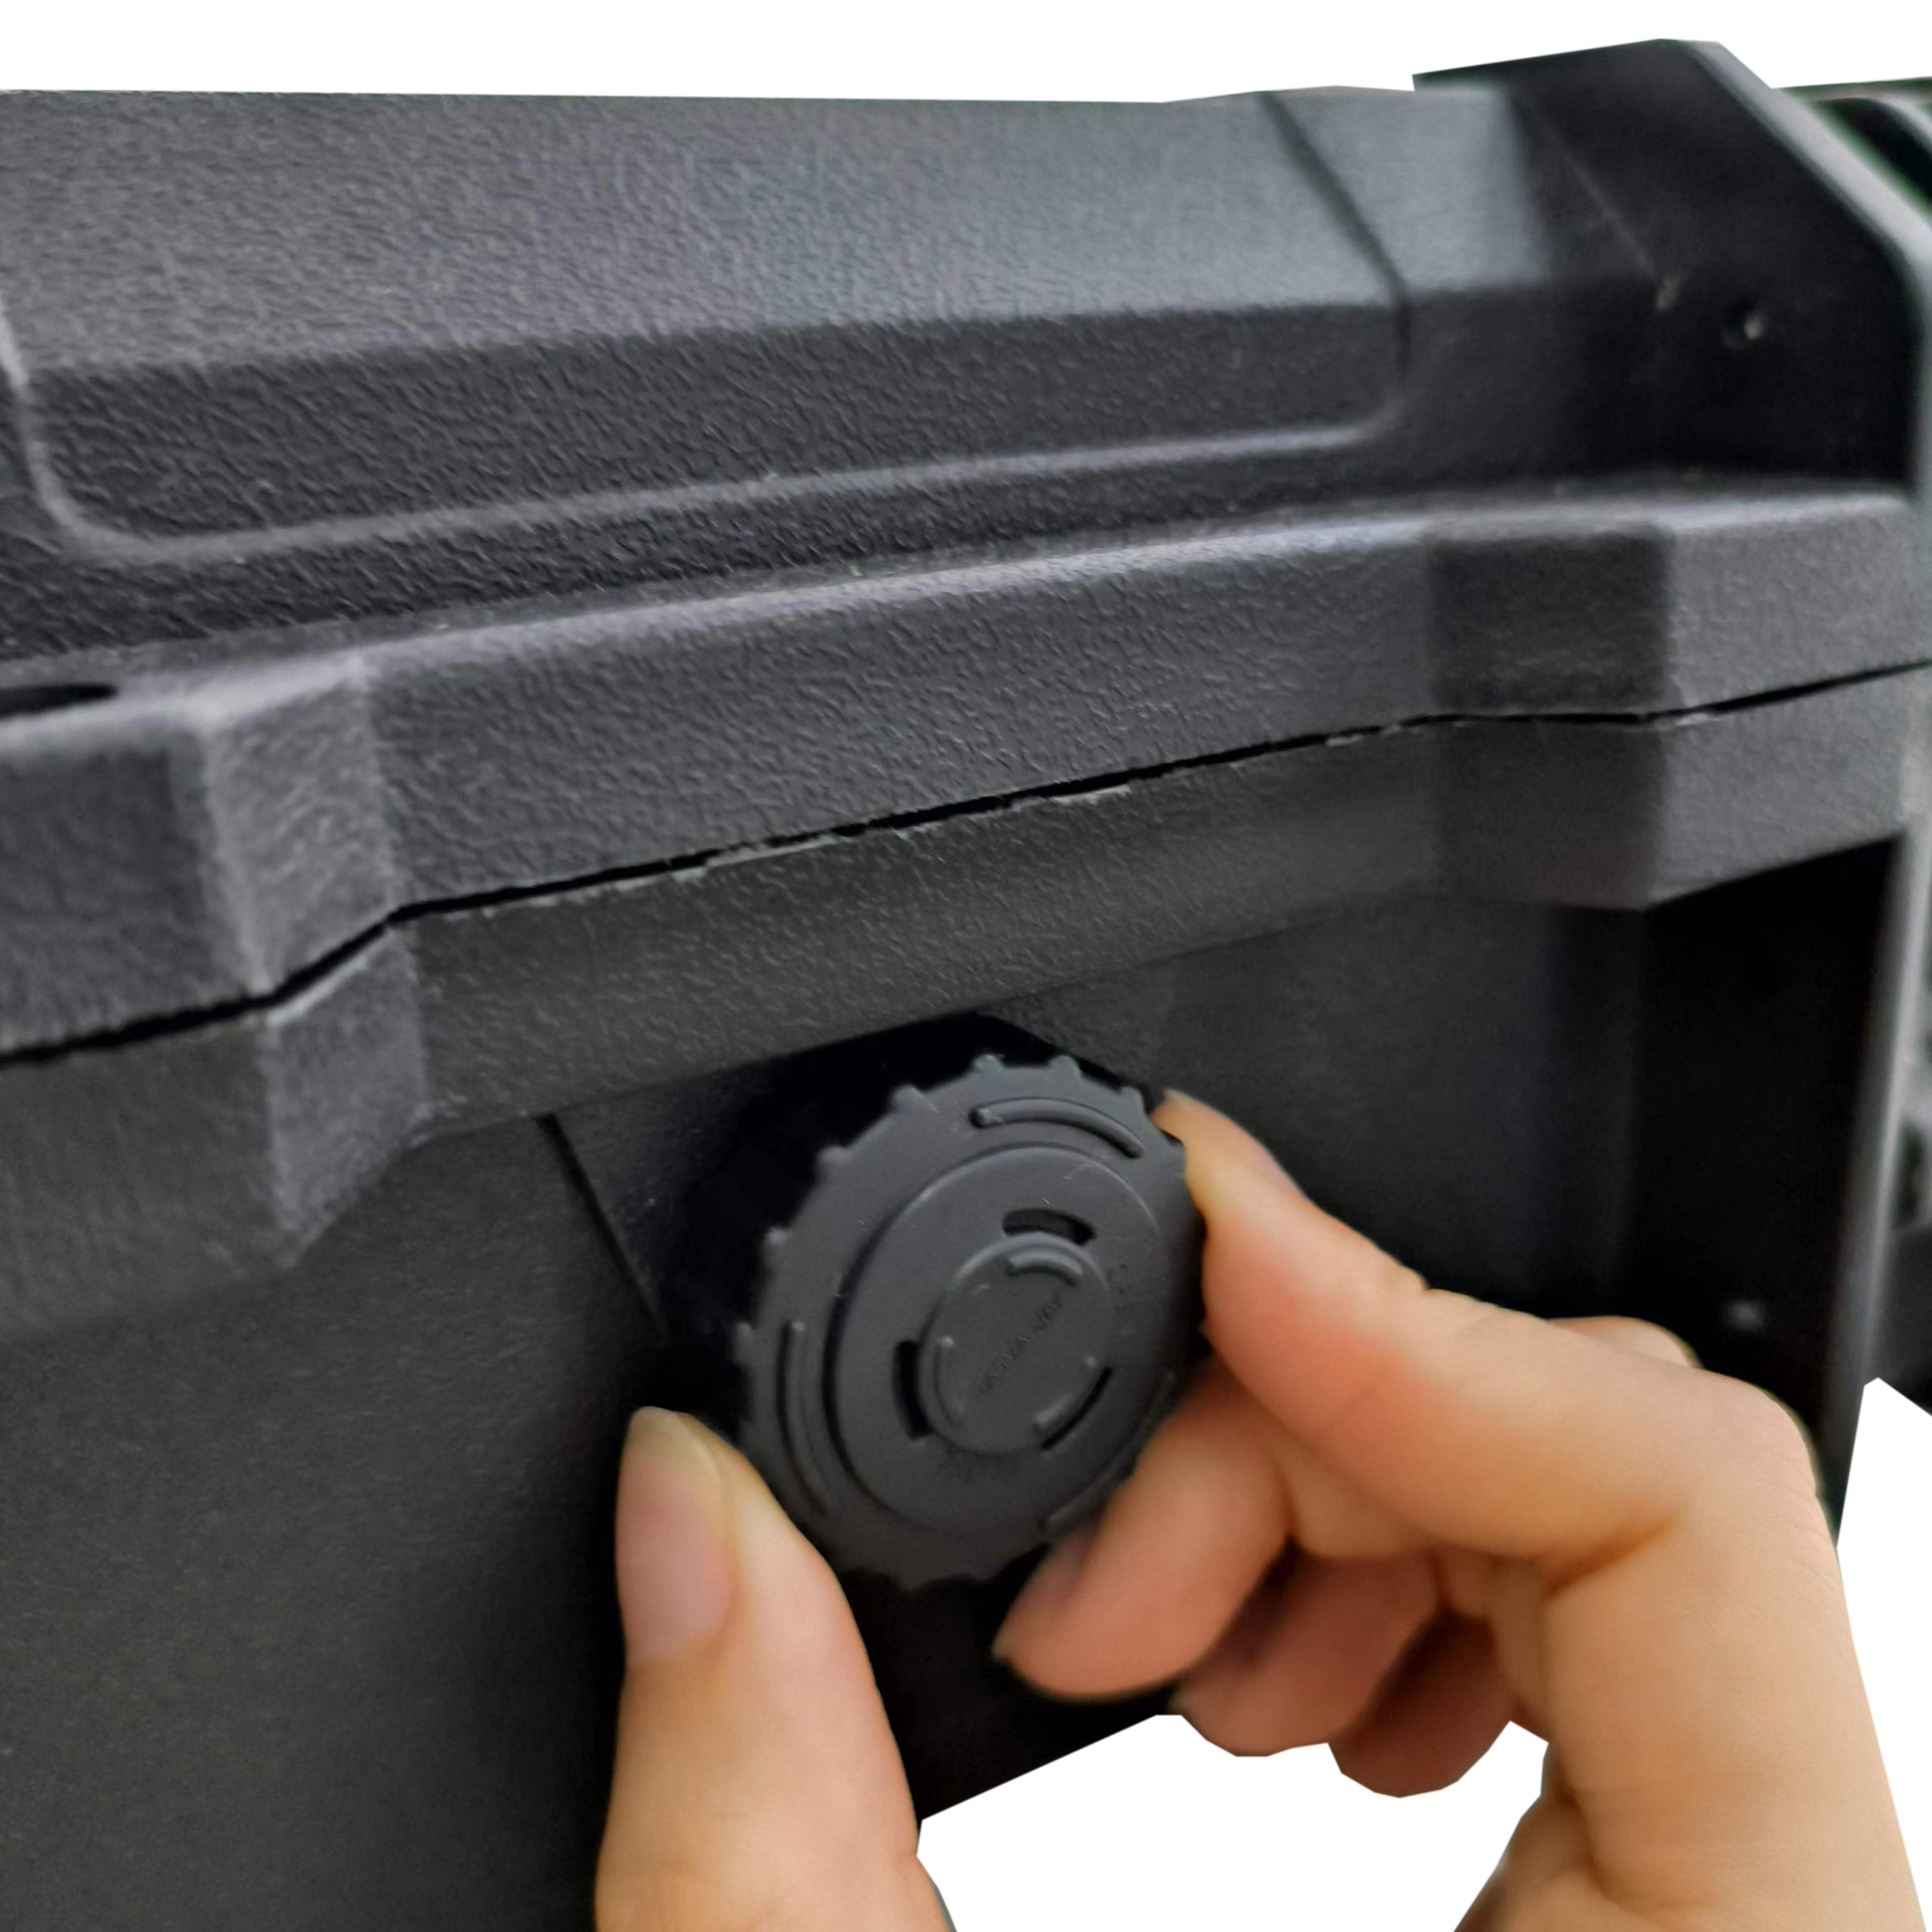 Tactical Gun Case Hard Plastic Case With Wheels For Gun